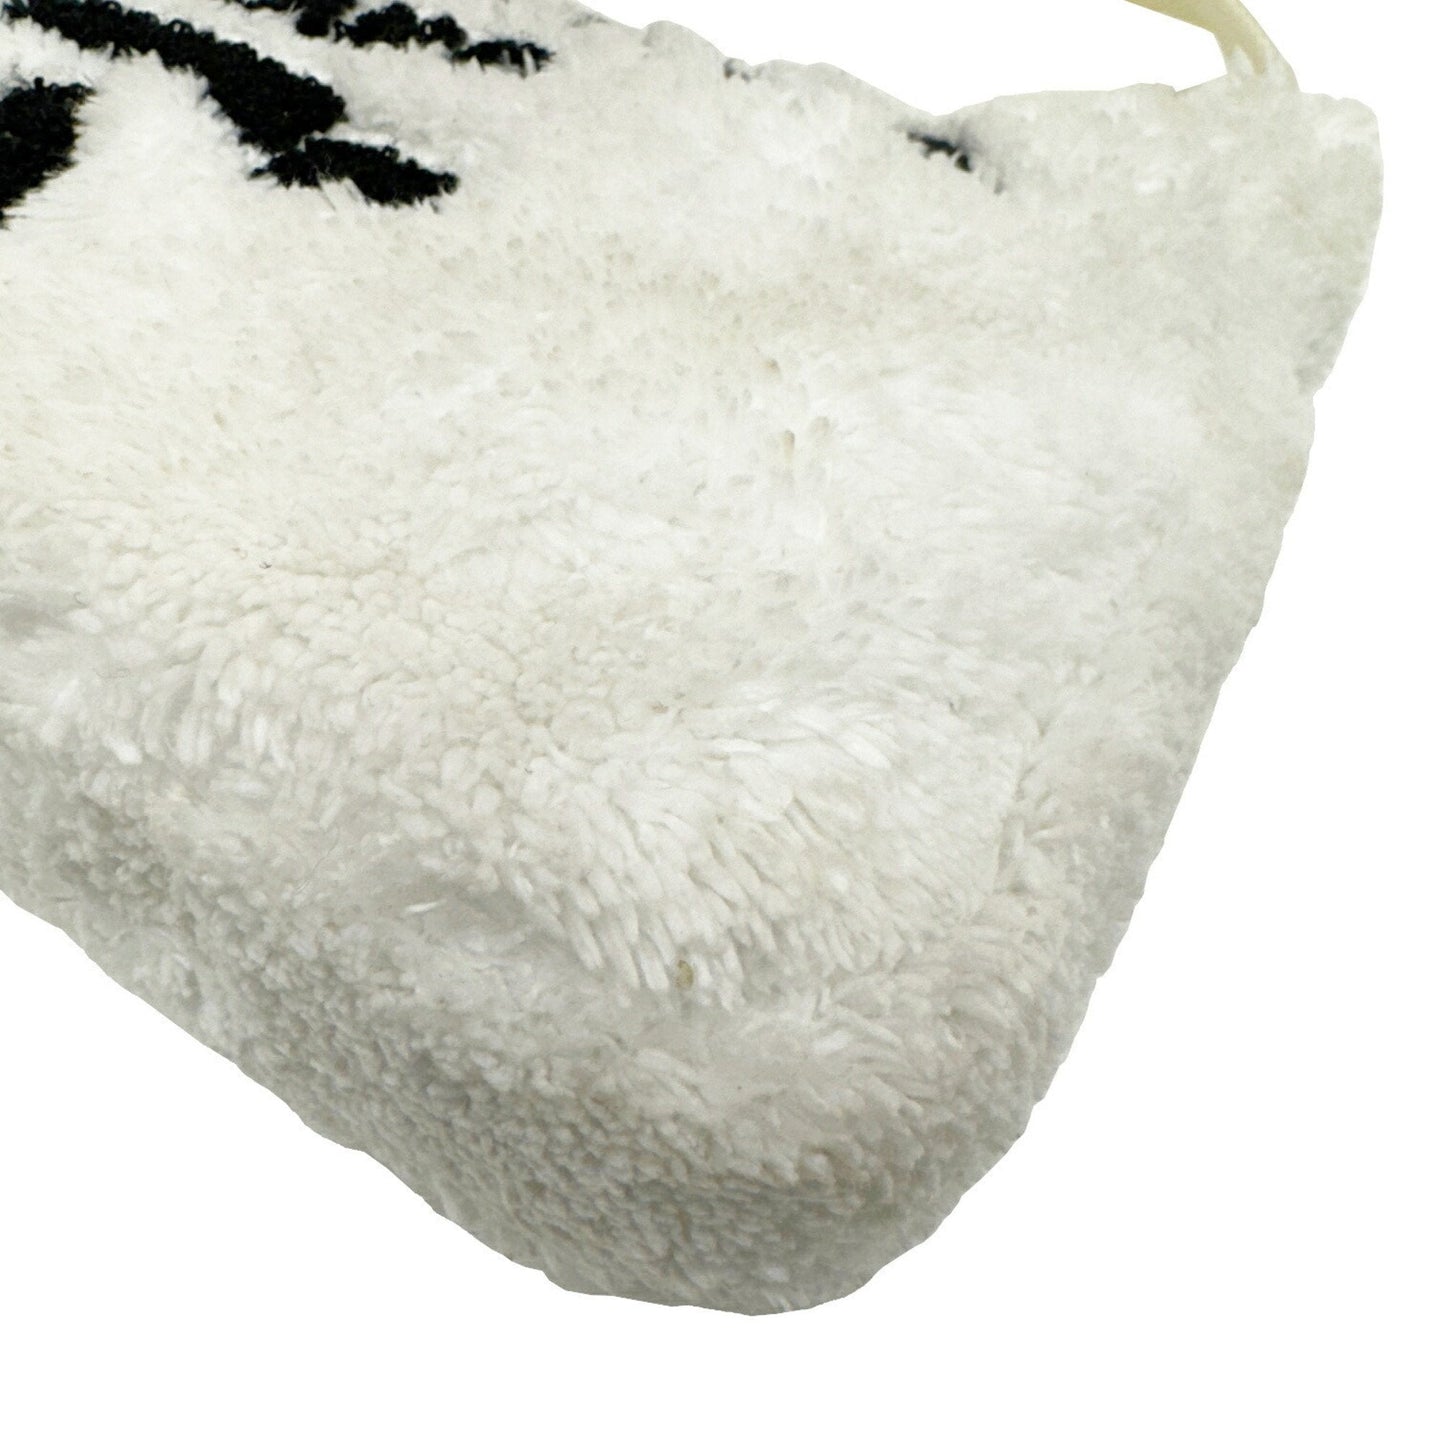 Prada Re-Edition White Fur Shoulder Bag (Pre-Owned)